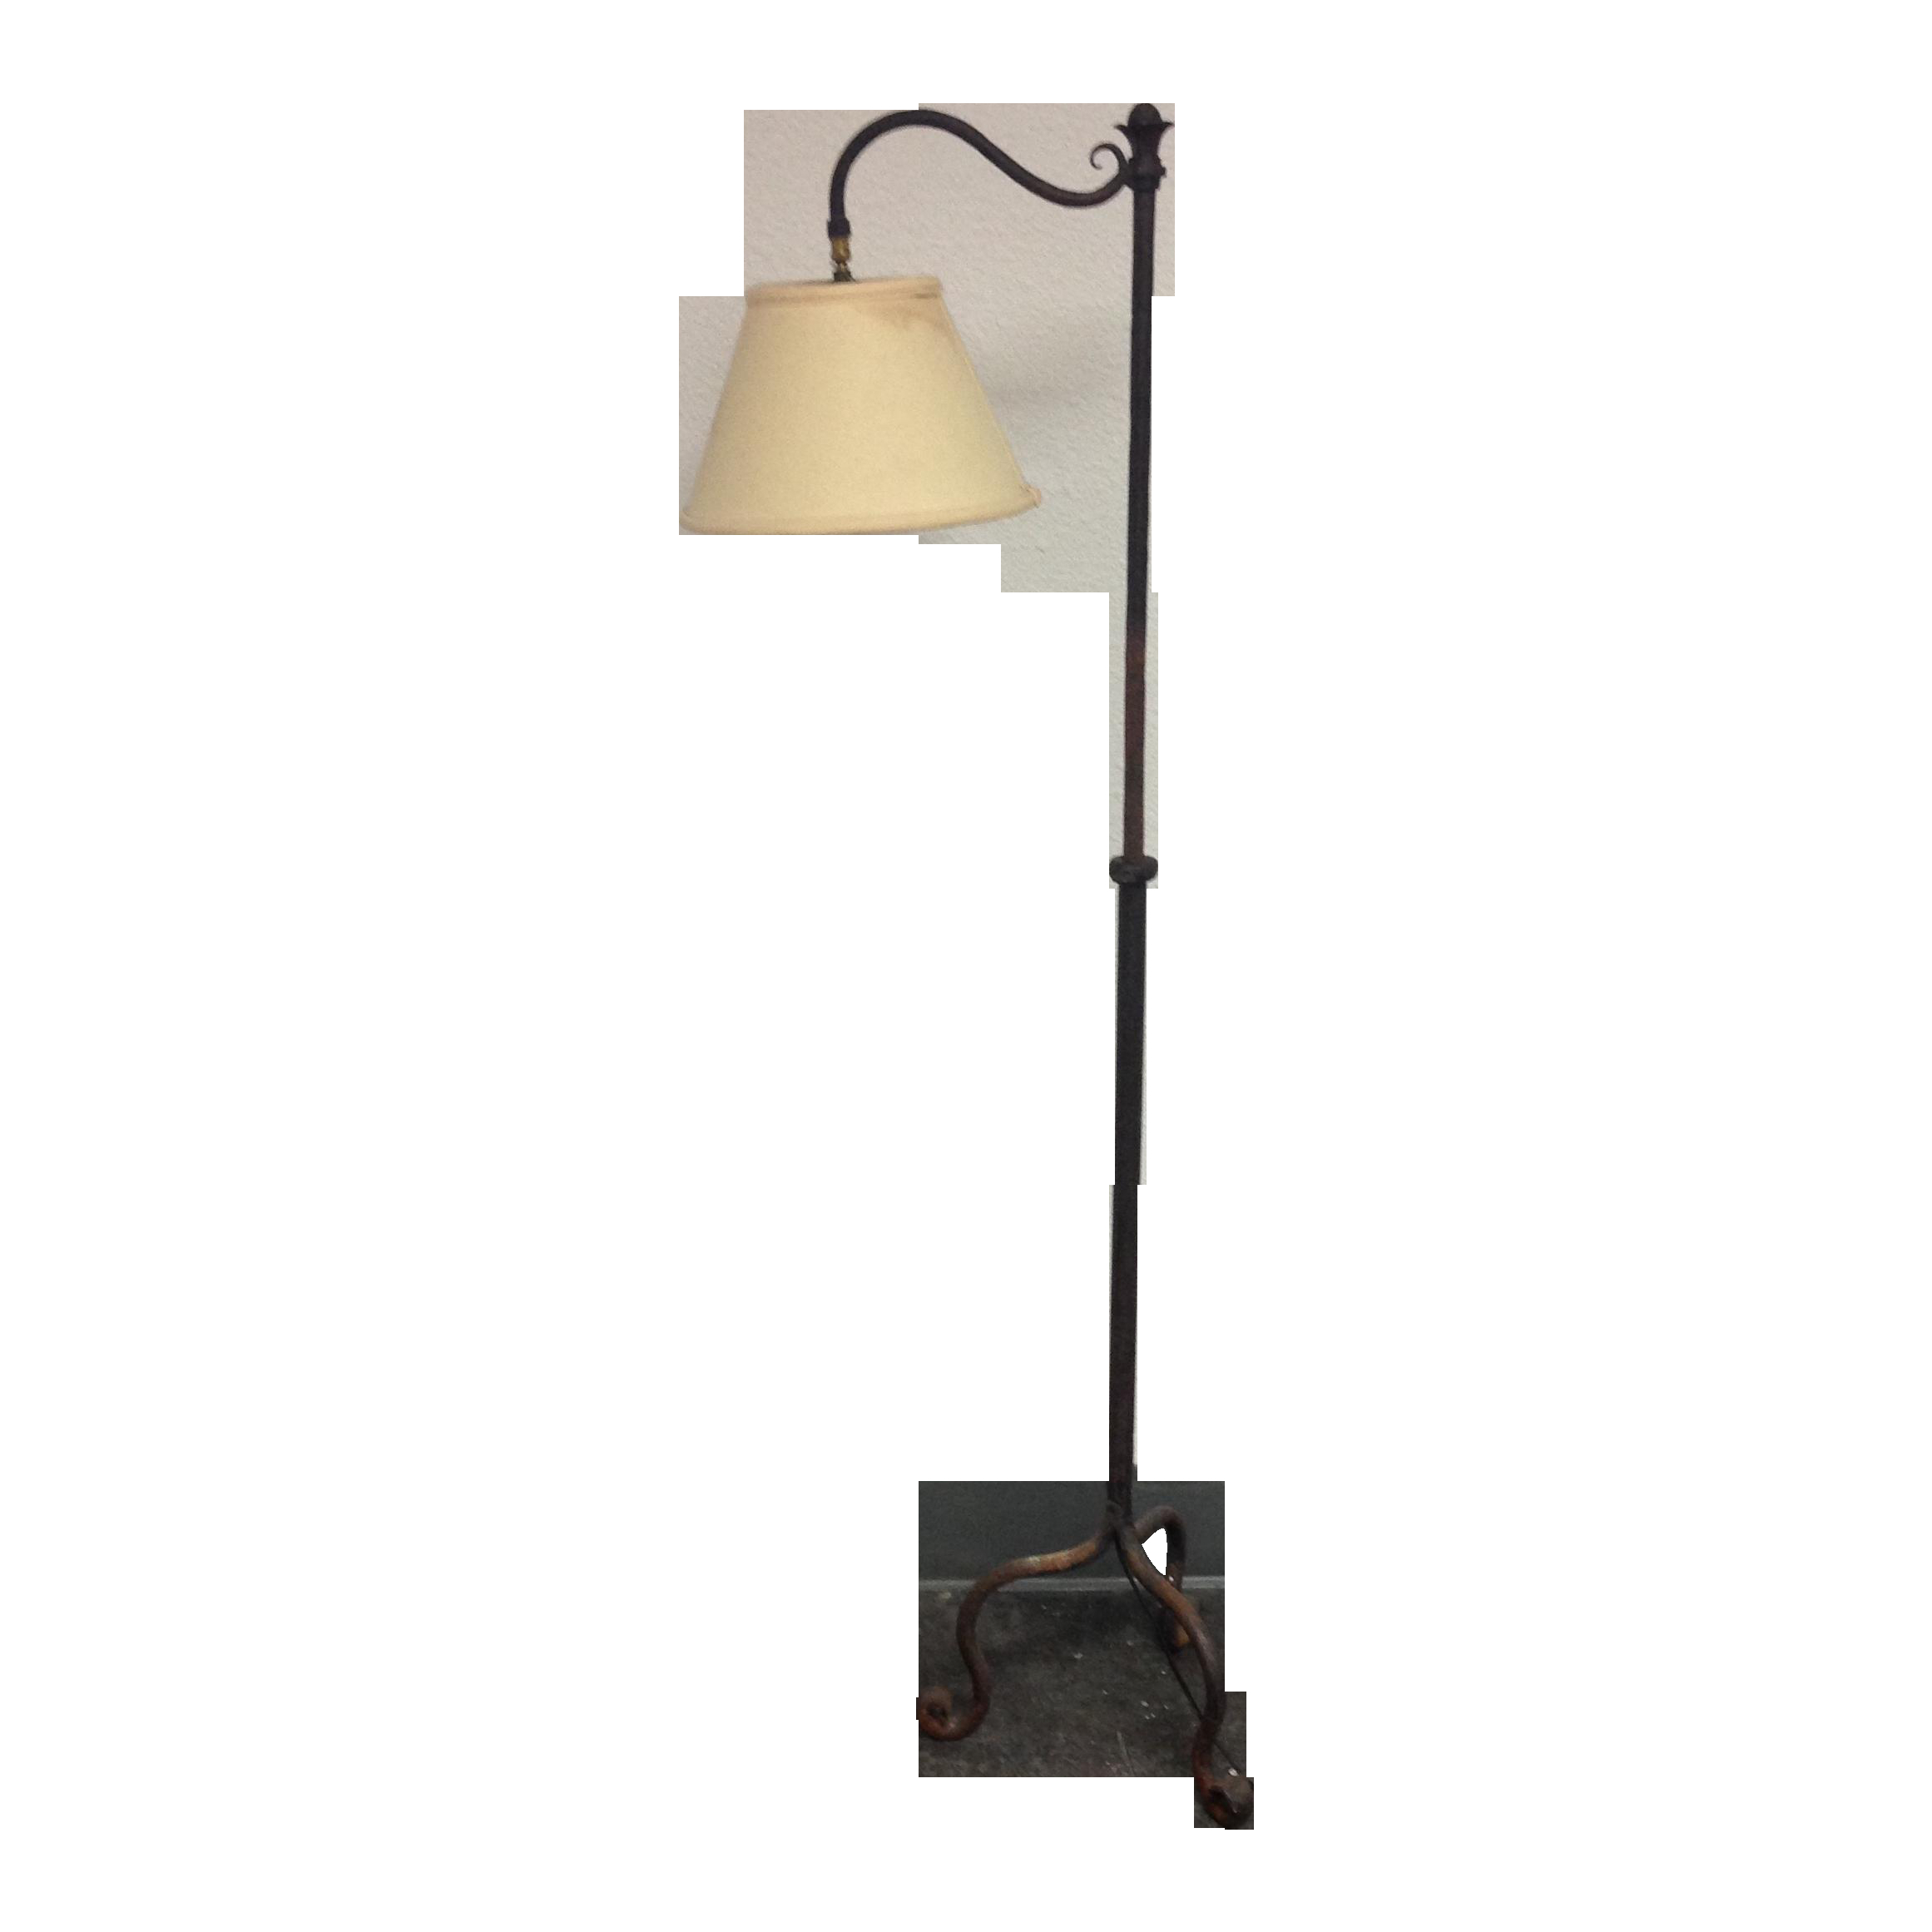 Wrought Iron Adjustable Floor Lamp Design Plus Gallery with regard to measurements 2322 X 2322